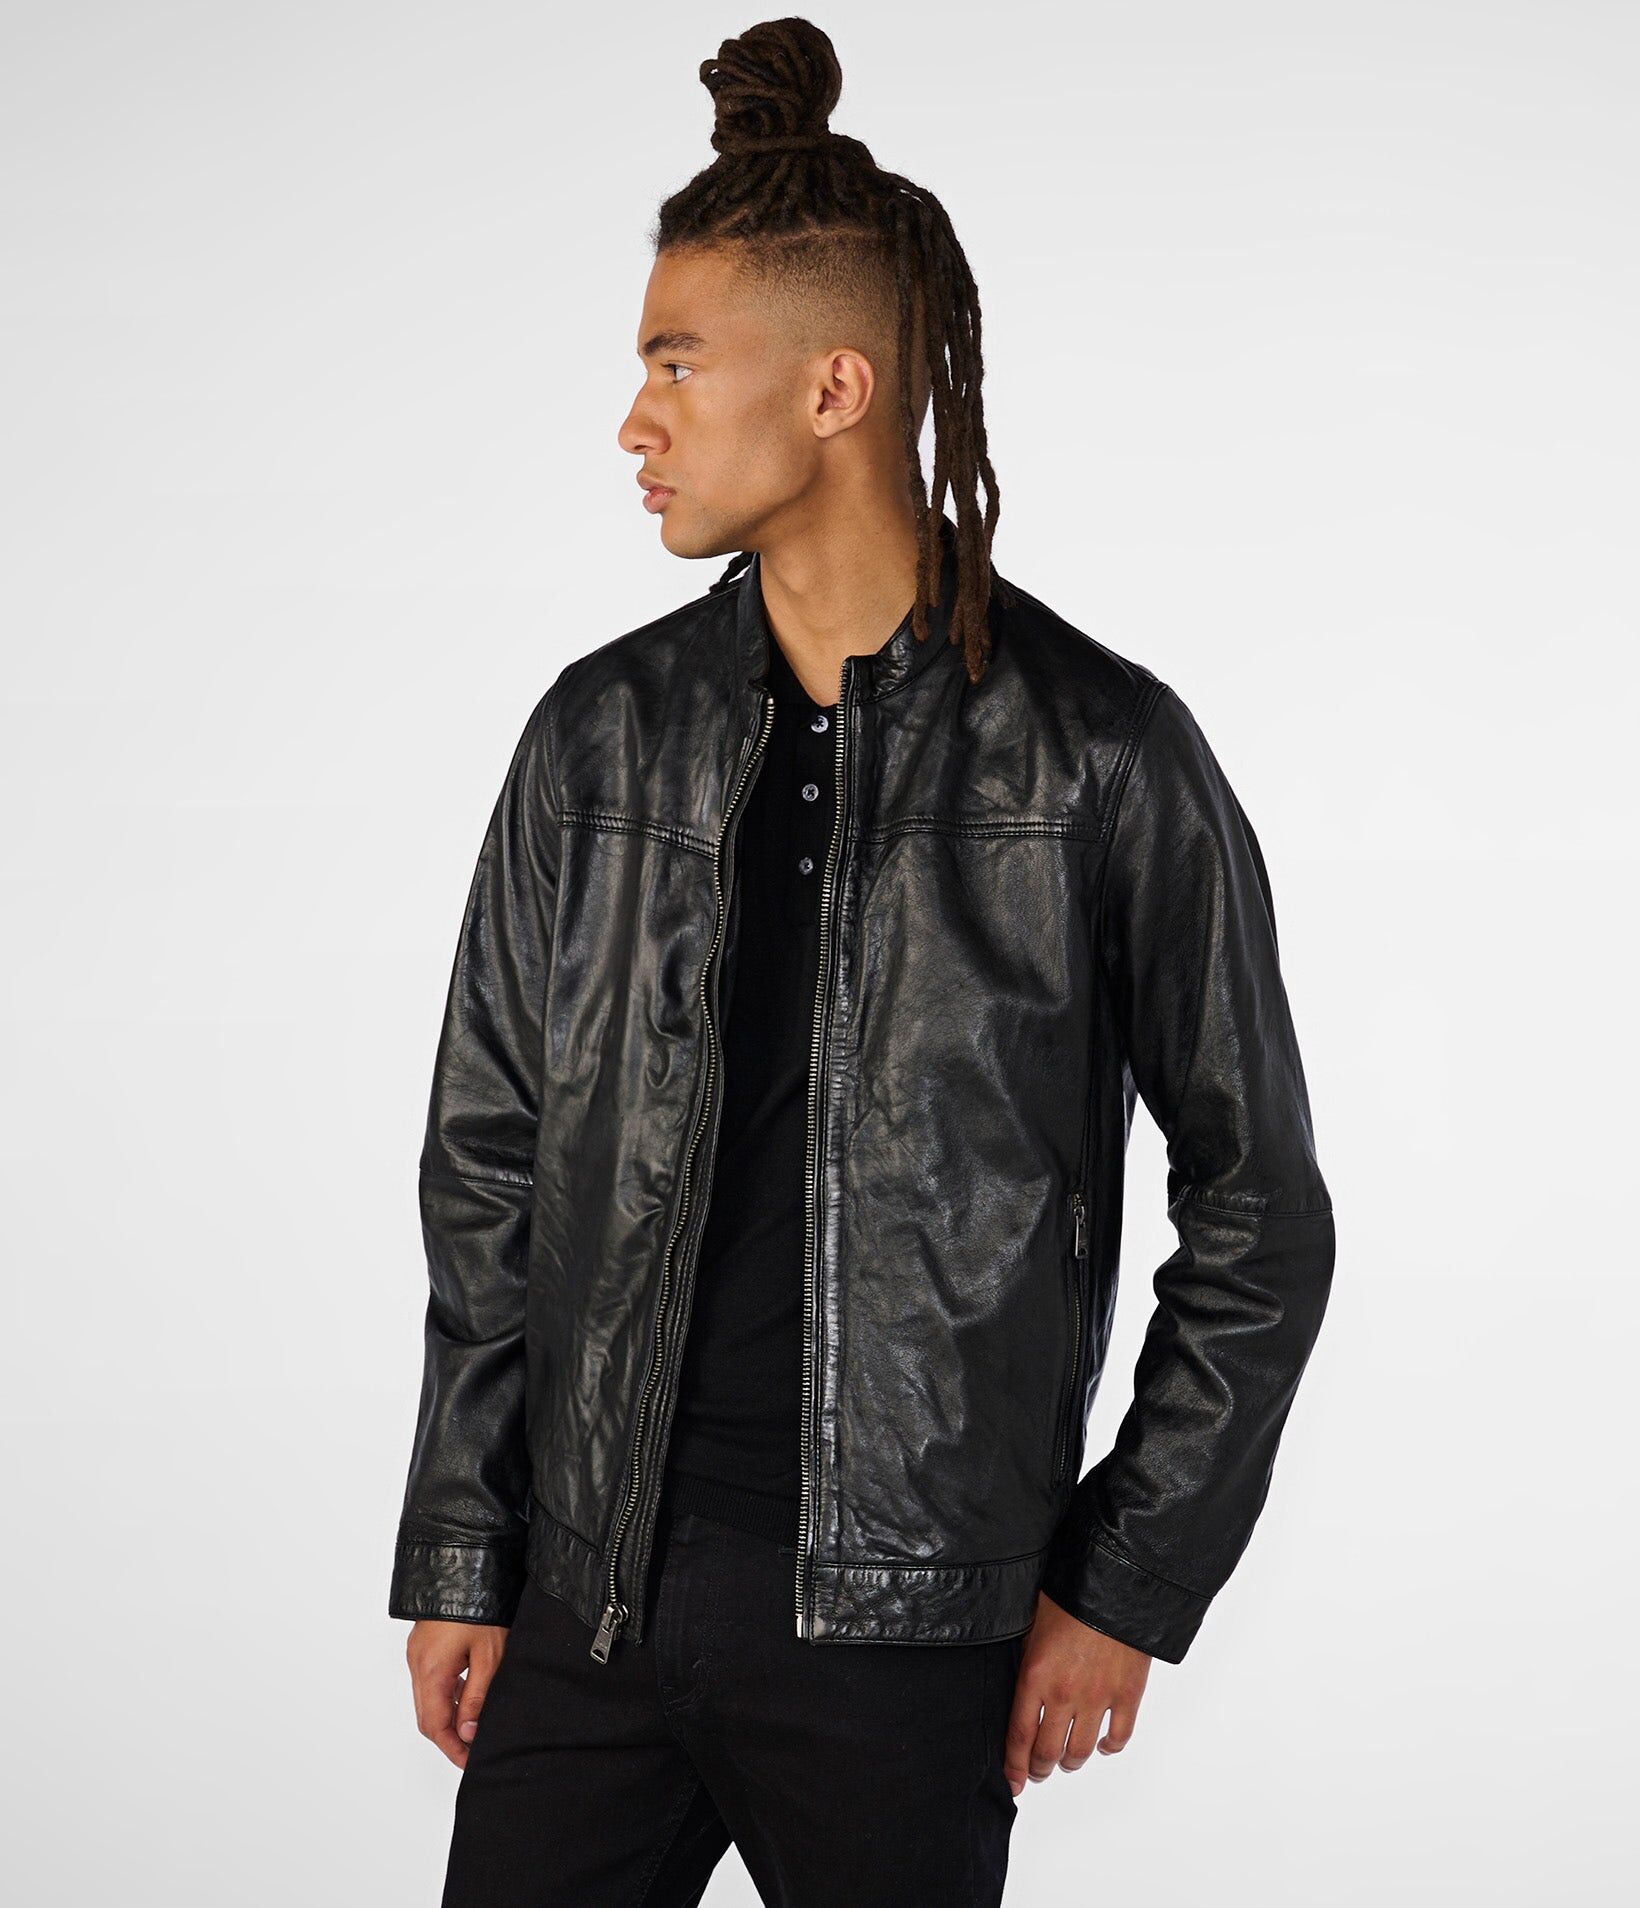 Wilsons Leather   Men's Justin Genuine Leather Jacket   Black   Large